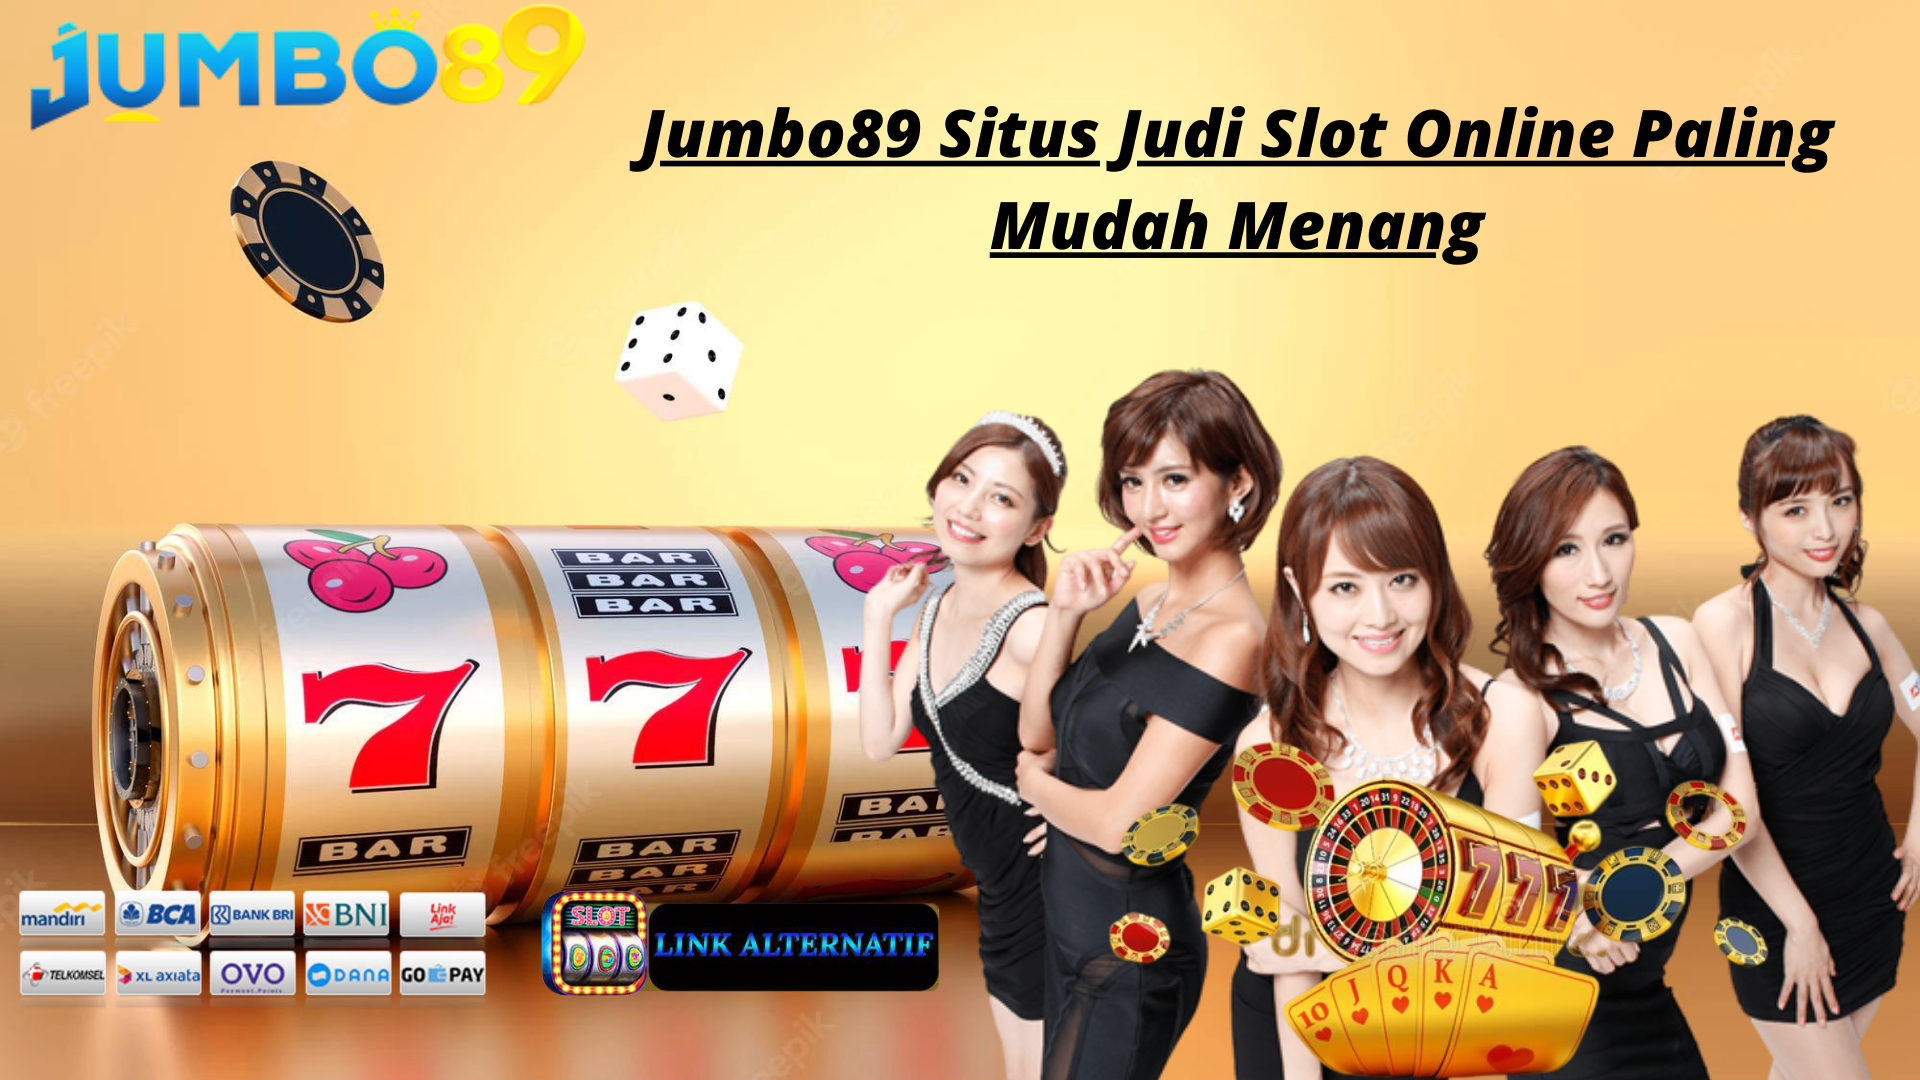 Jumbo89 Situs Judi Slot Online Paling Mudah Menang